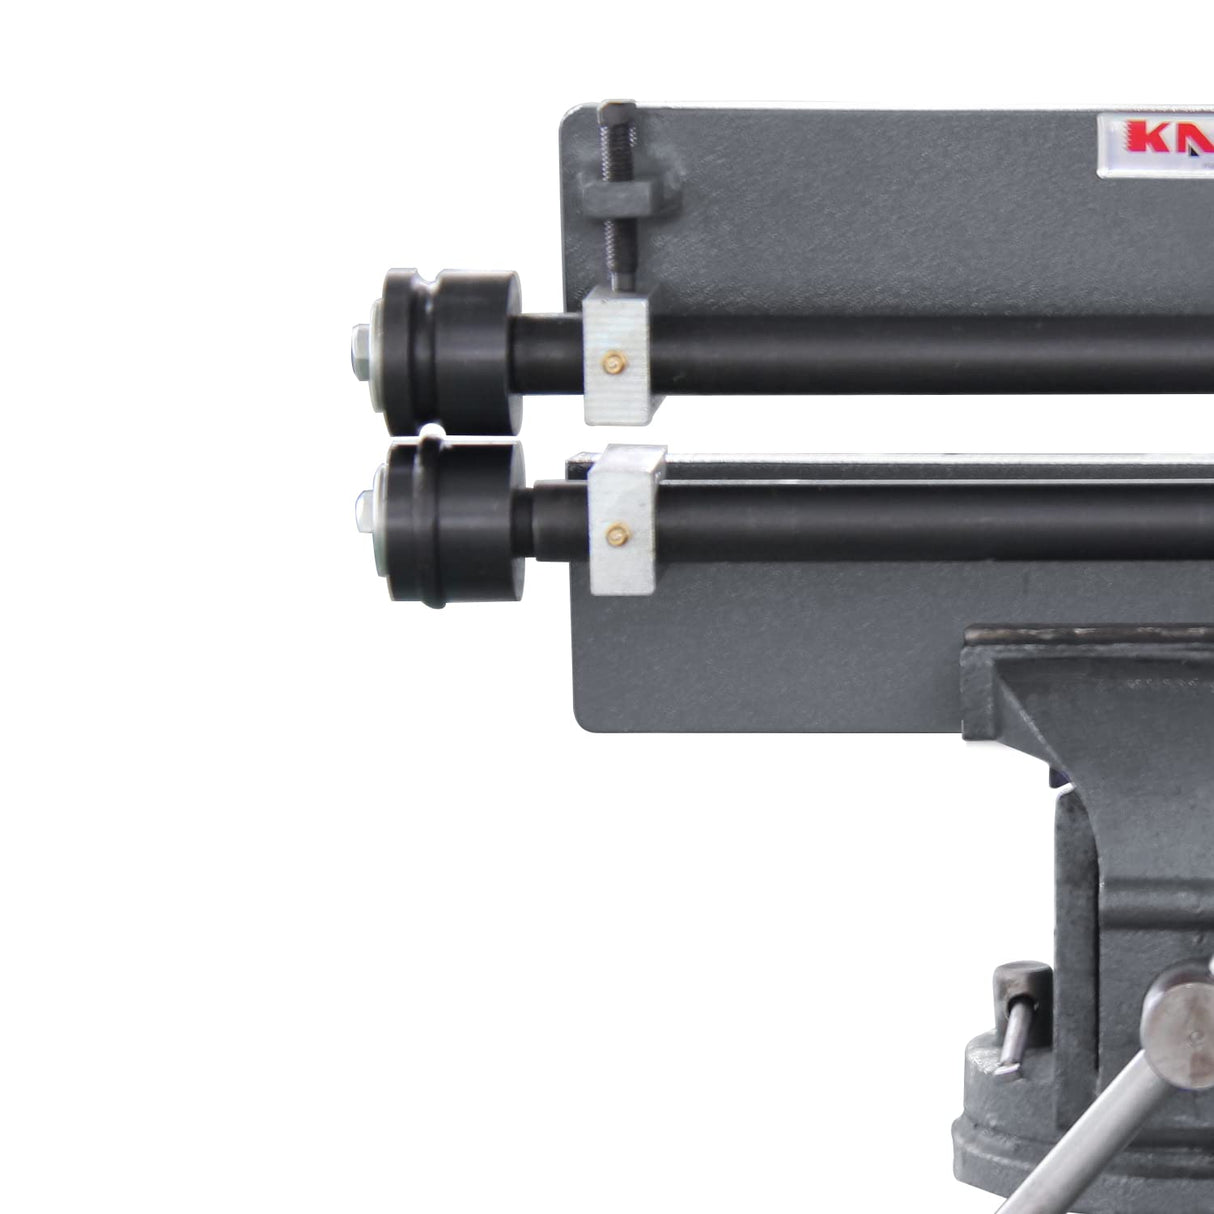 KANG Industrial RM12 Sheet Metal Fabrication Bead Roller Kit & Forming Mandrels, 1.2mm mild steel thickness, 305mm throat depth